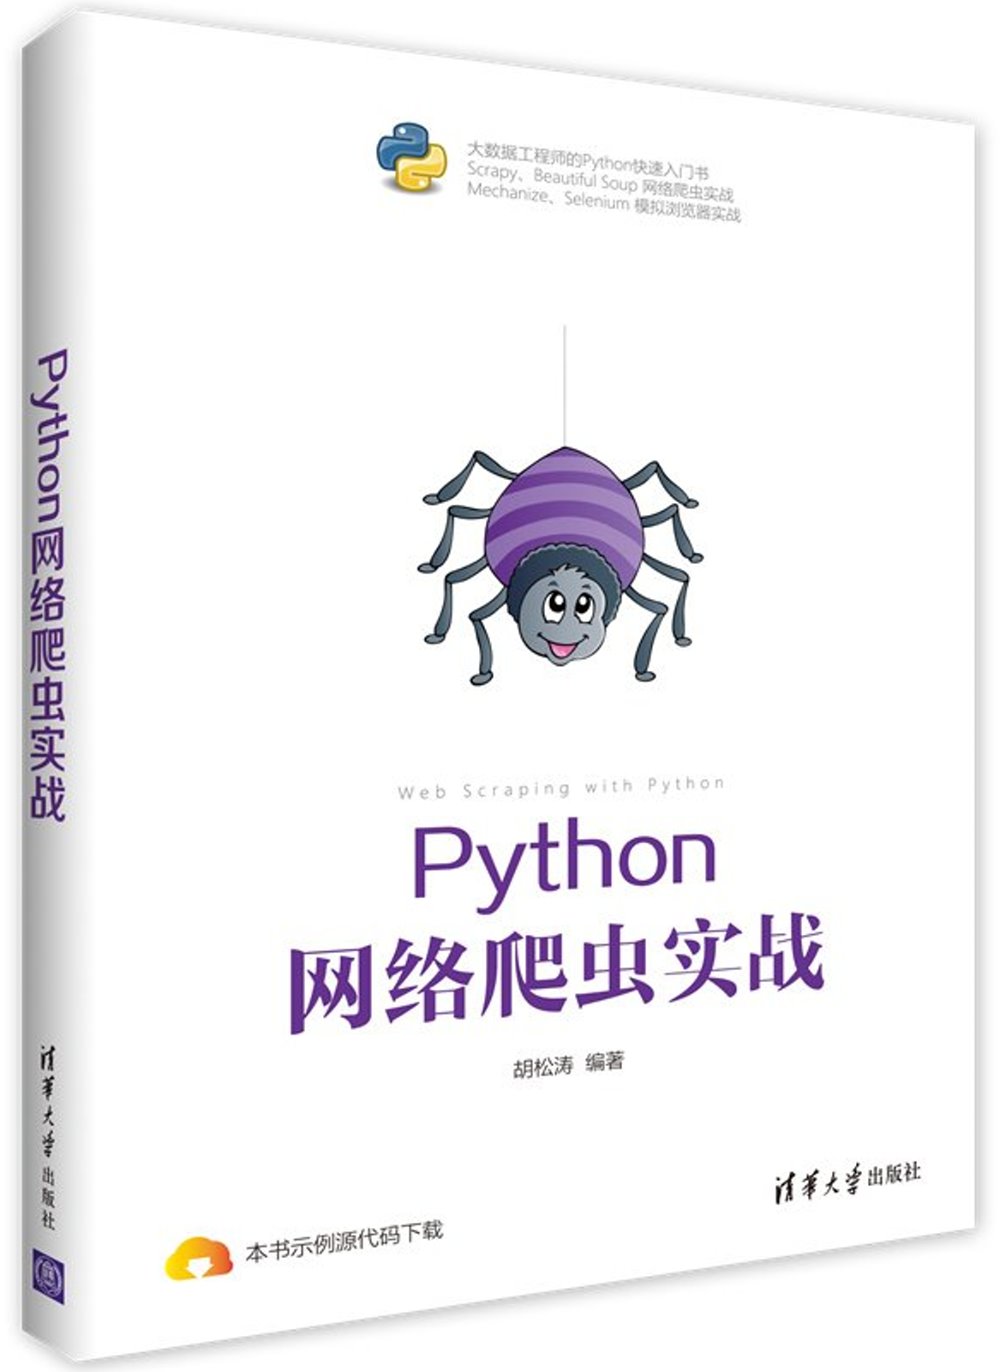 Python 網絡爬蟲實戰